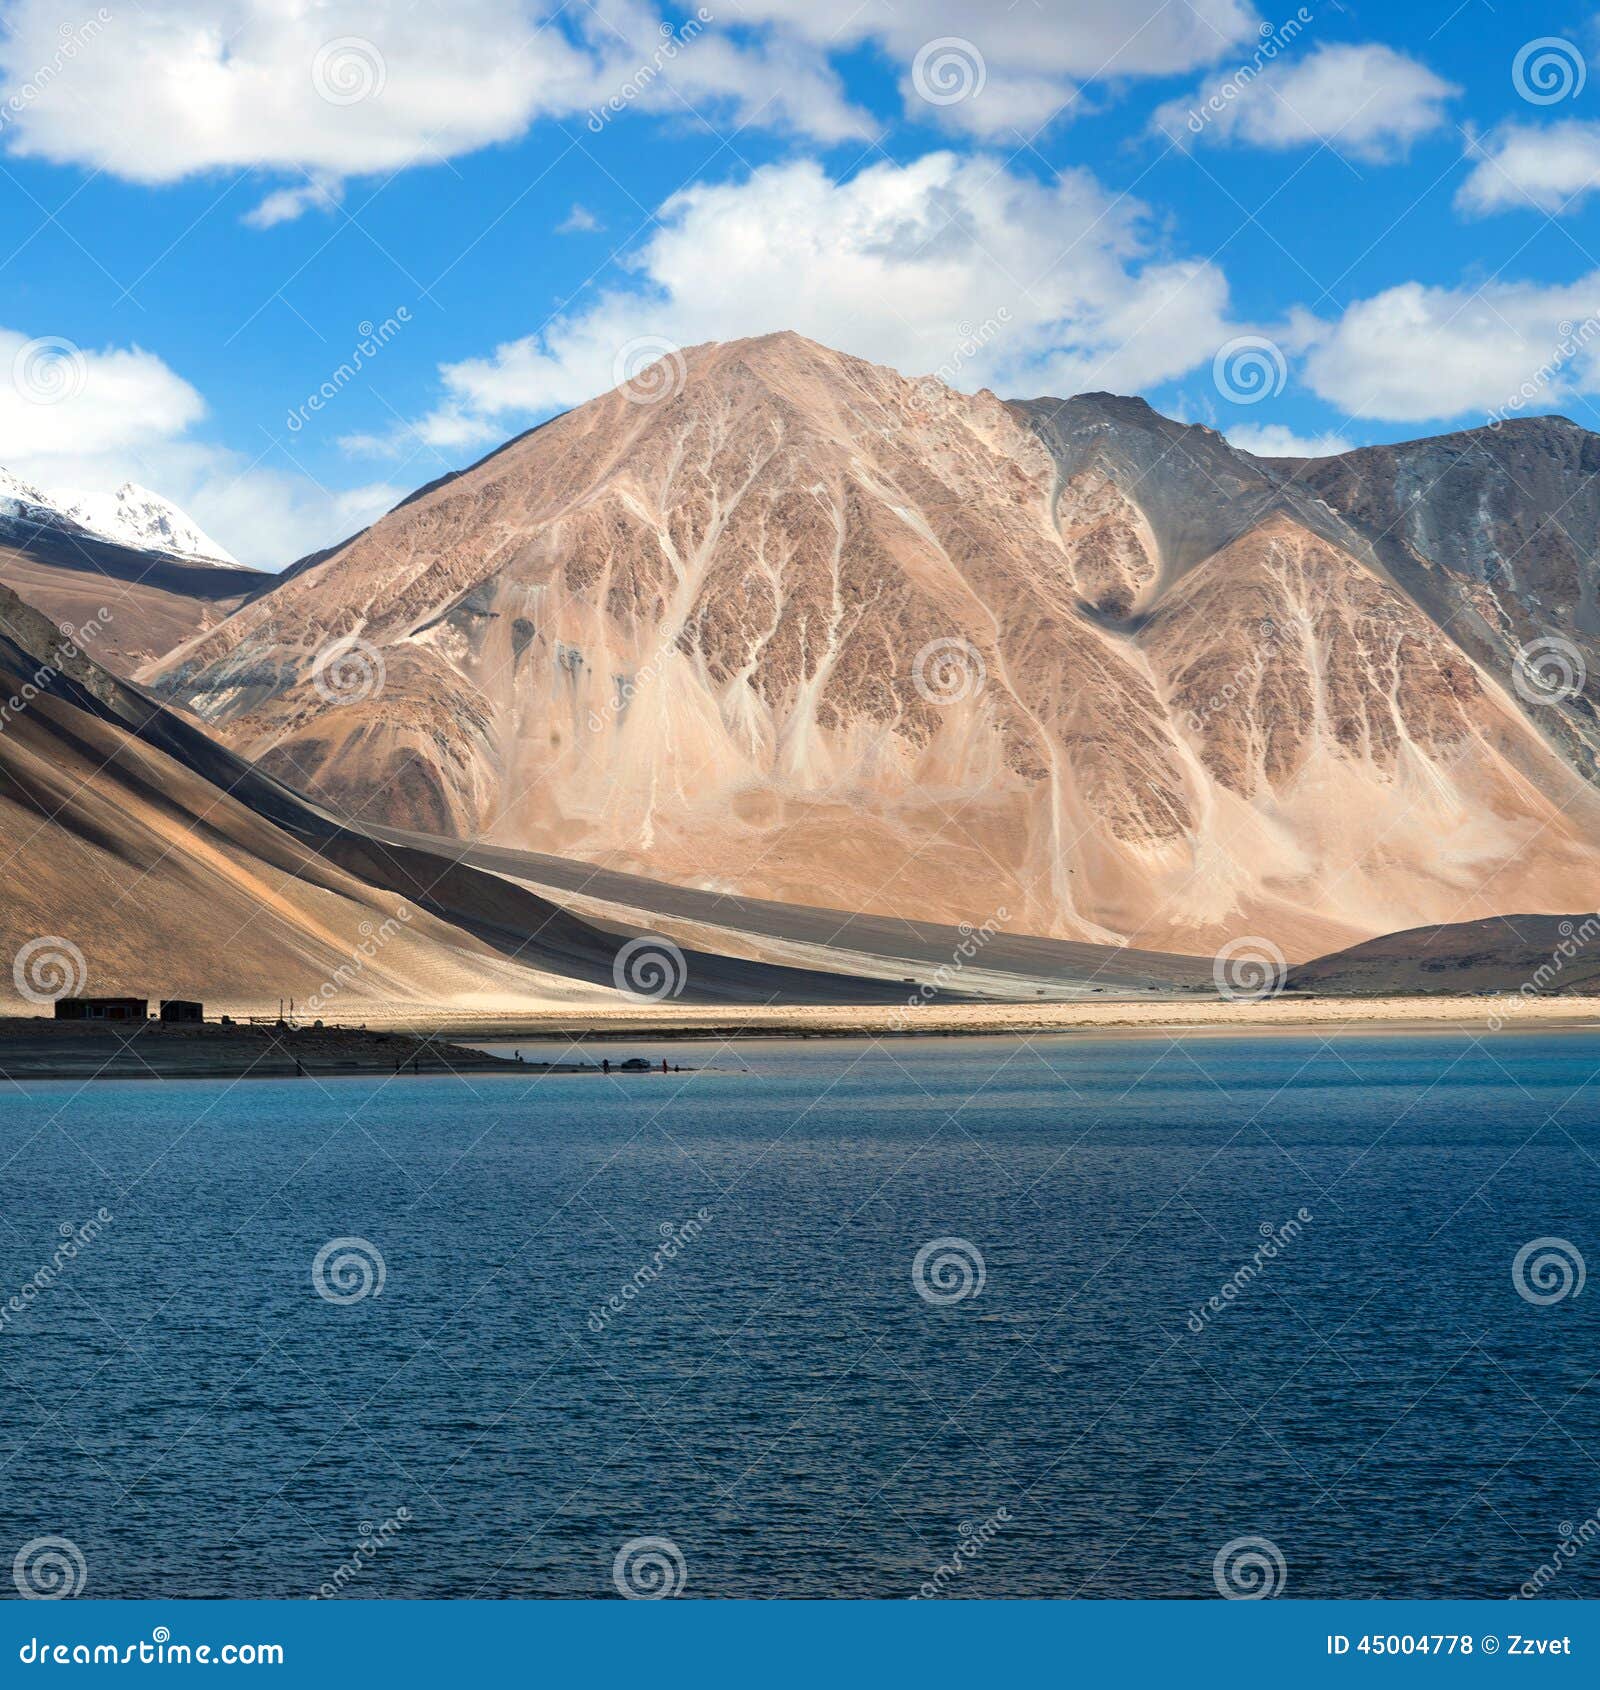 Pangong Lake In Ladakh Jammu And Kashmir State India Stock Photo